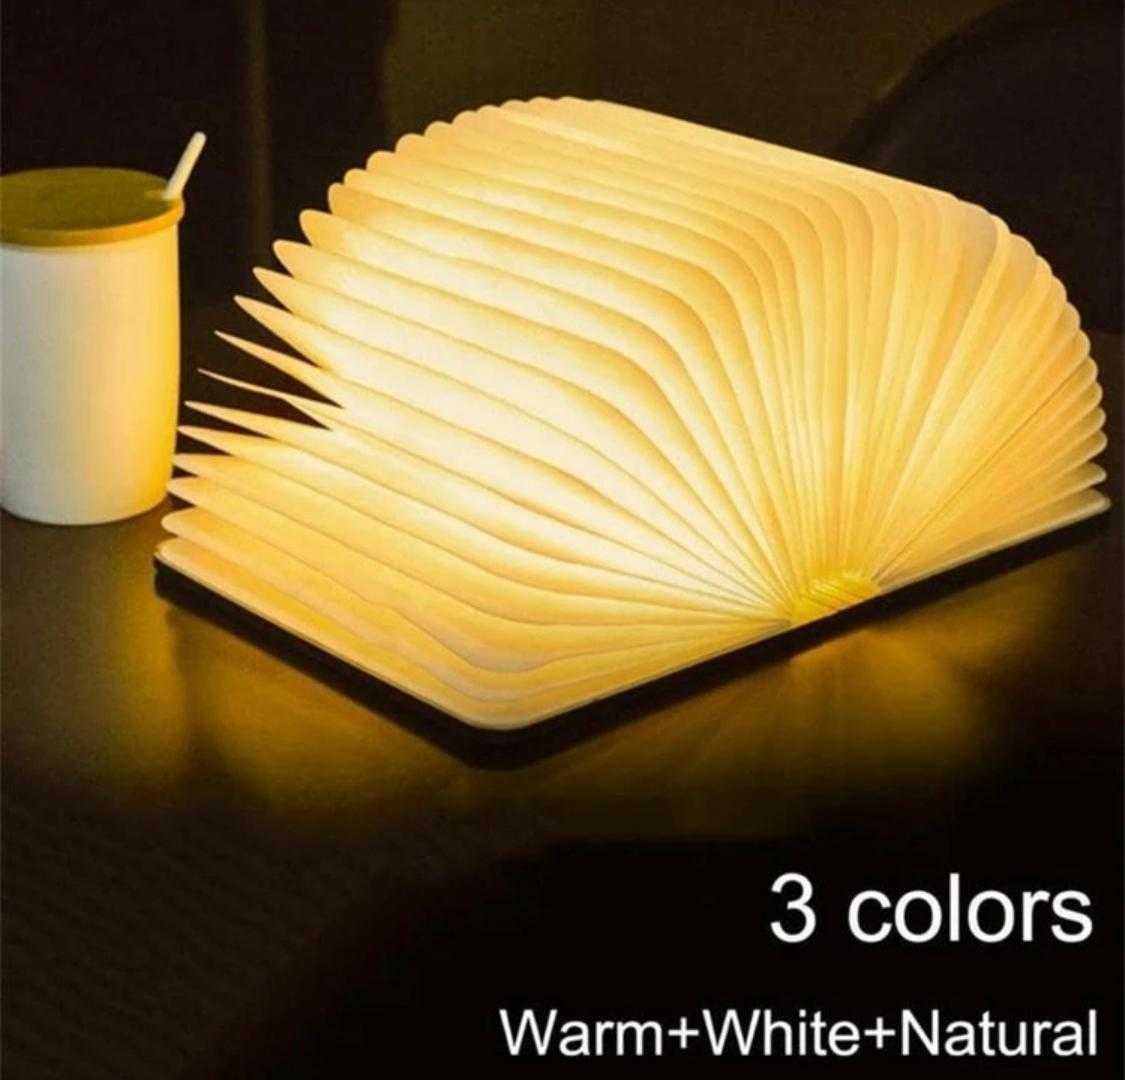 Lampa LED tip carte, accesoriu decorativ, lemn, maro, 14 cm x 11.5 cm